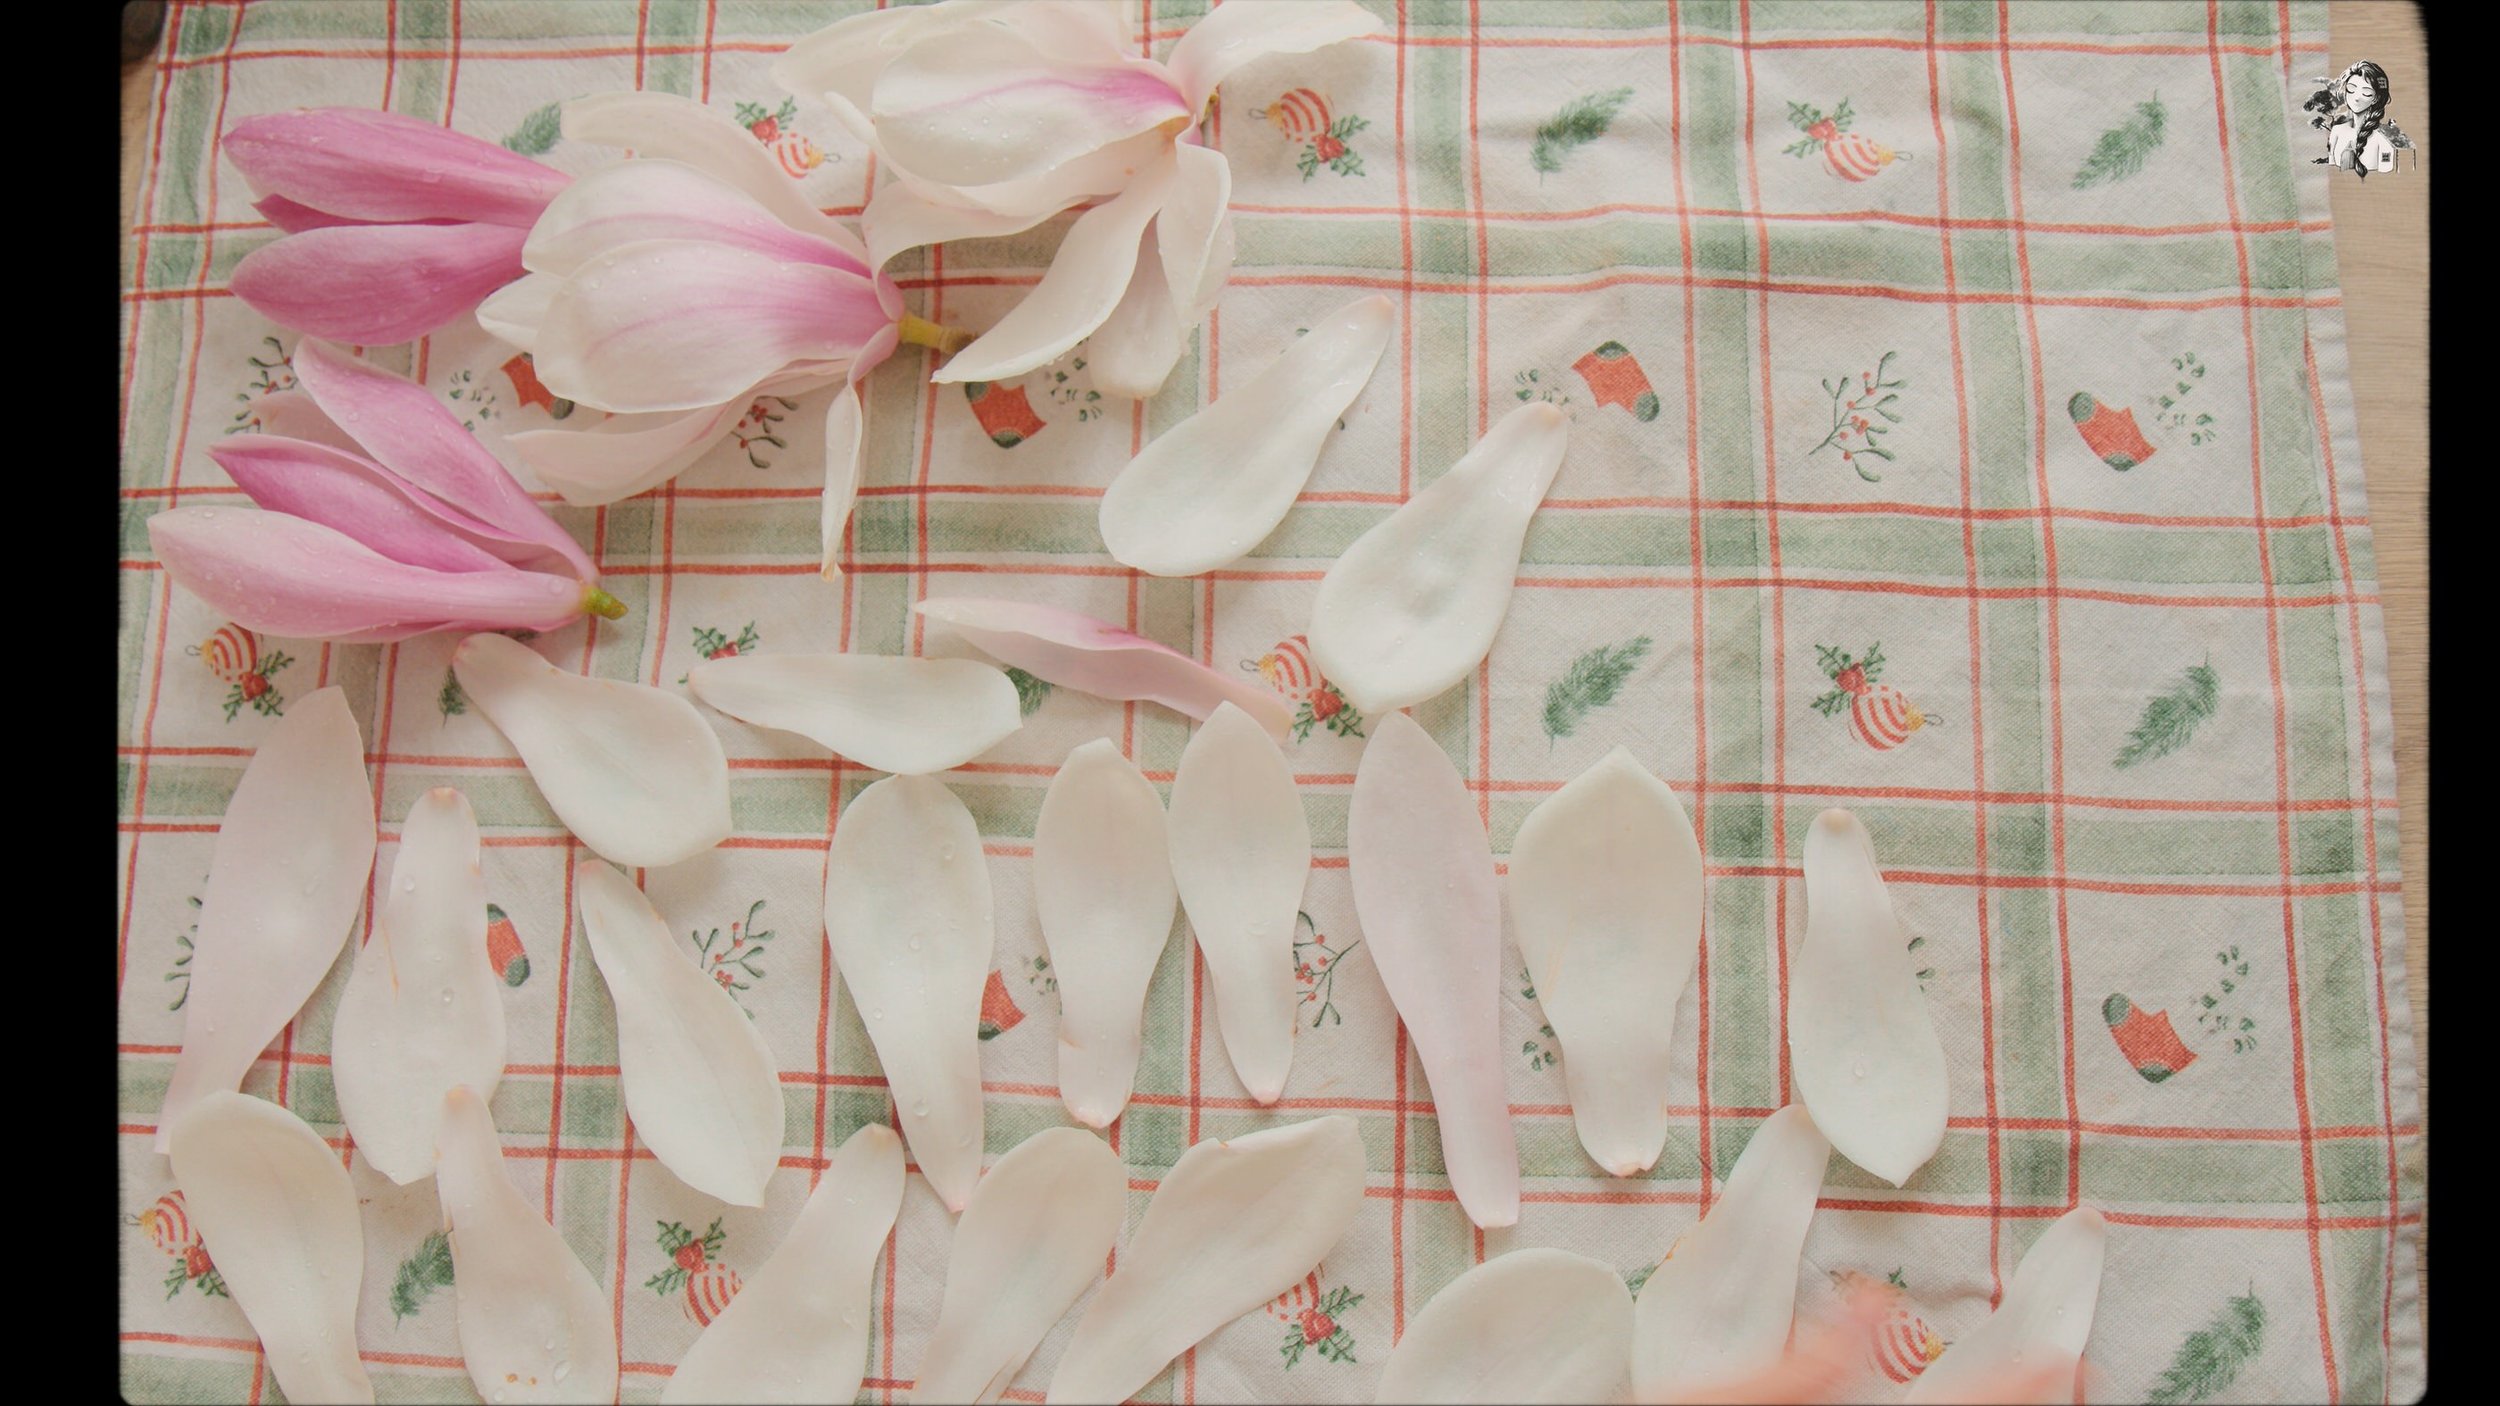 Finding Joy in Homemaking - Foraging Magnolia - Magnolia Tee - Magnolia Salad - Her86m2 _1.194.1.jpg